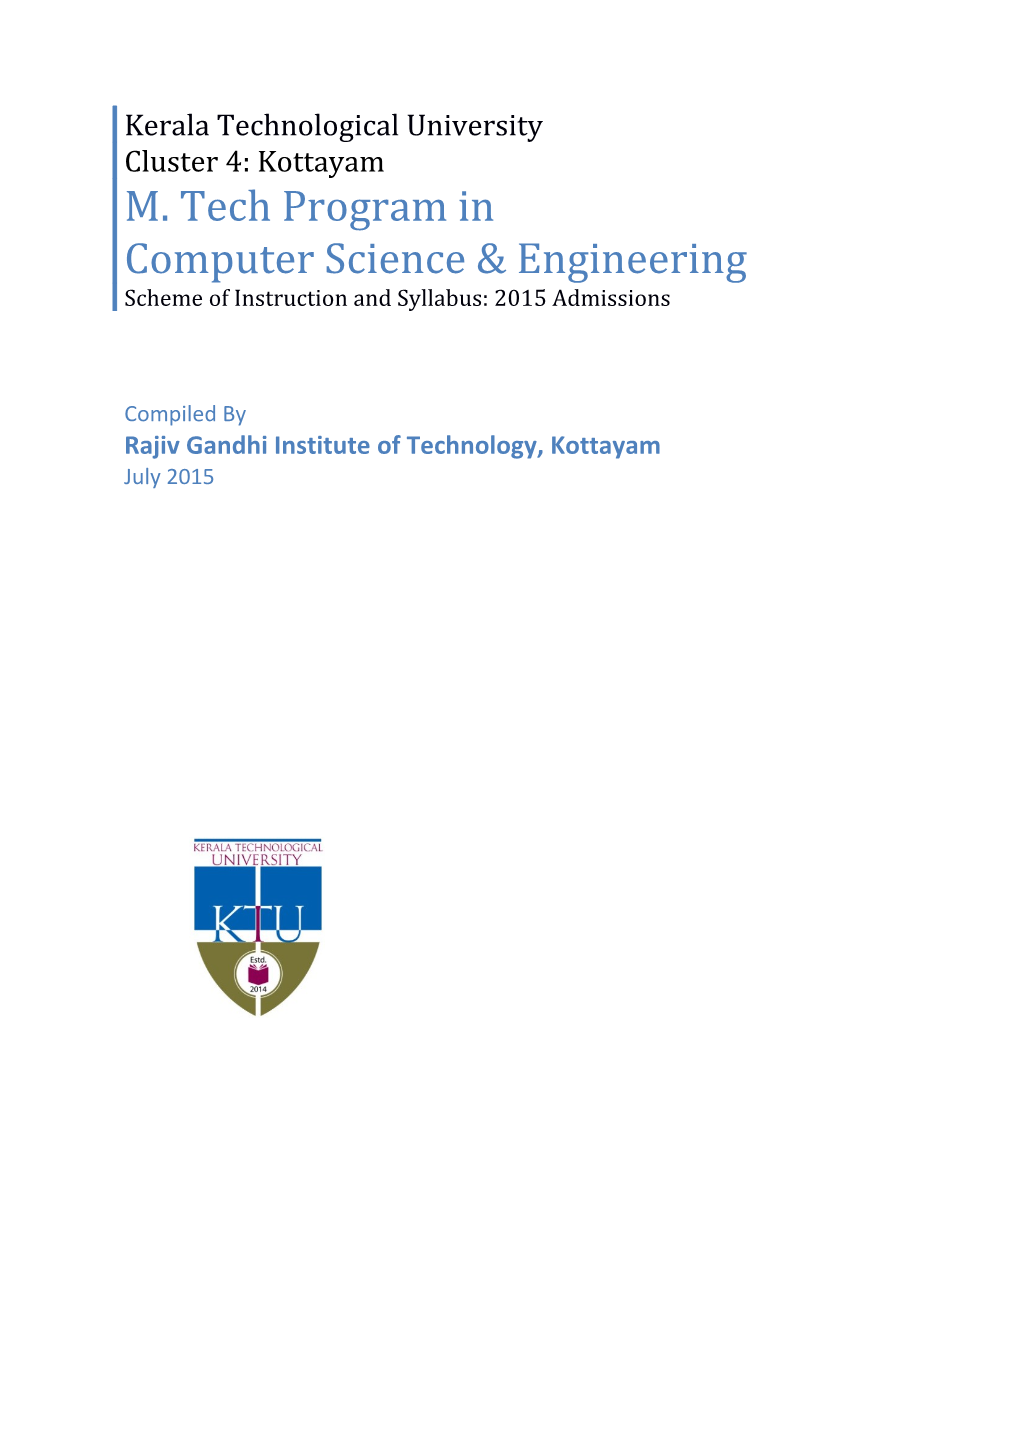 M. Tech (Computer Science & Engineering)